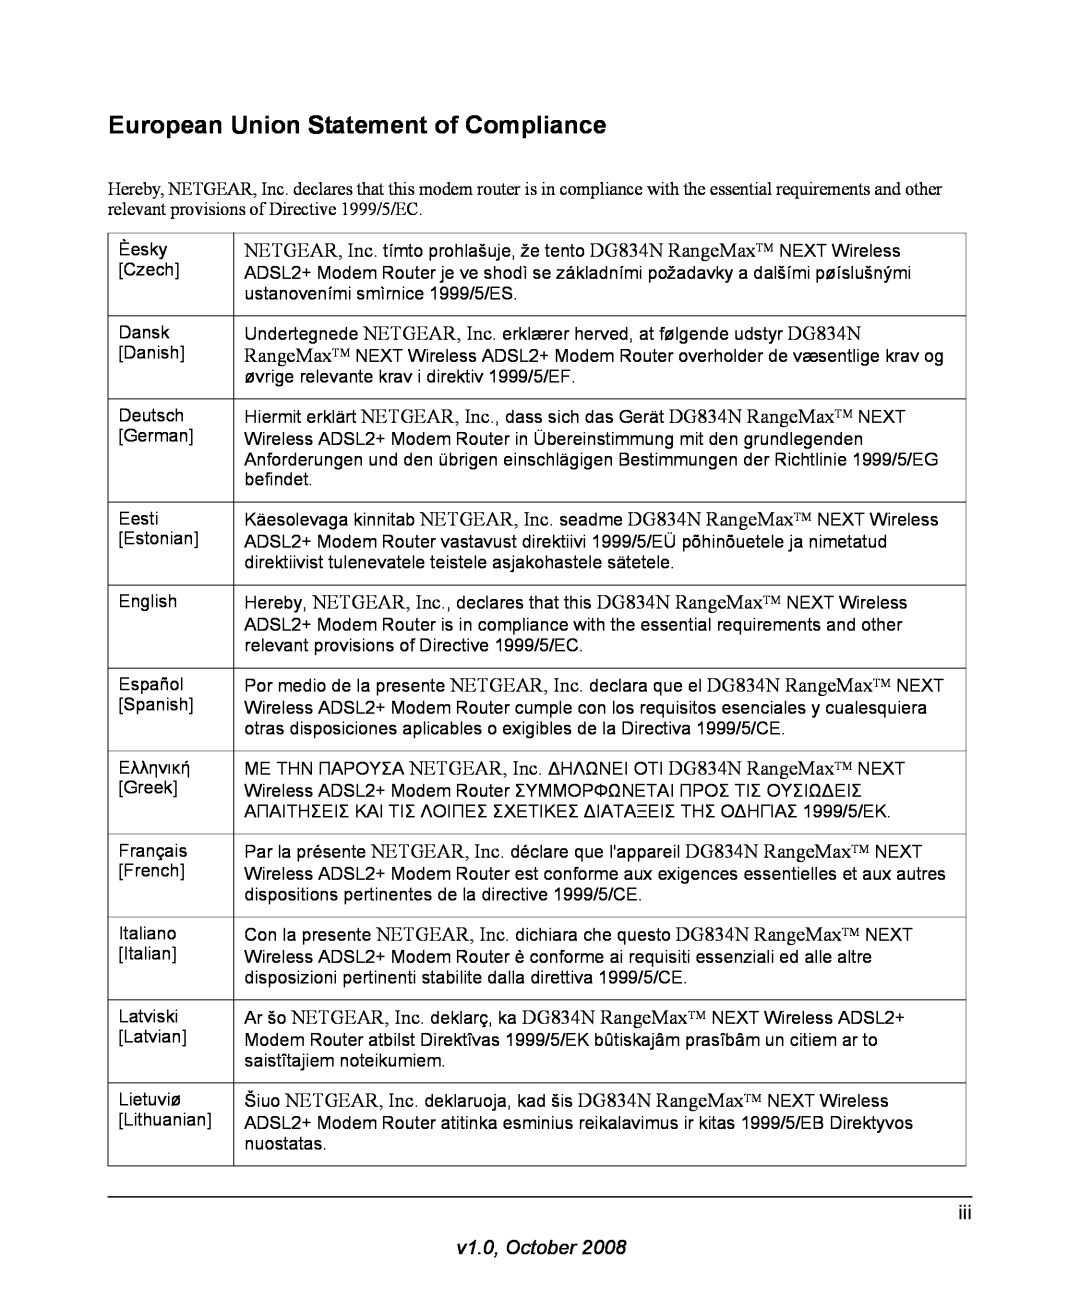 NETGEAR DG834N manual European Union Statement of Compliance, v1.0, October 